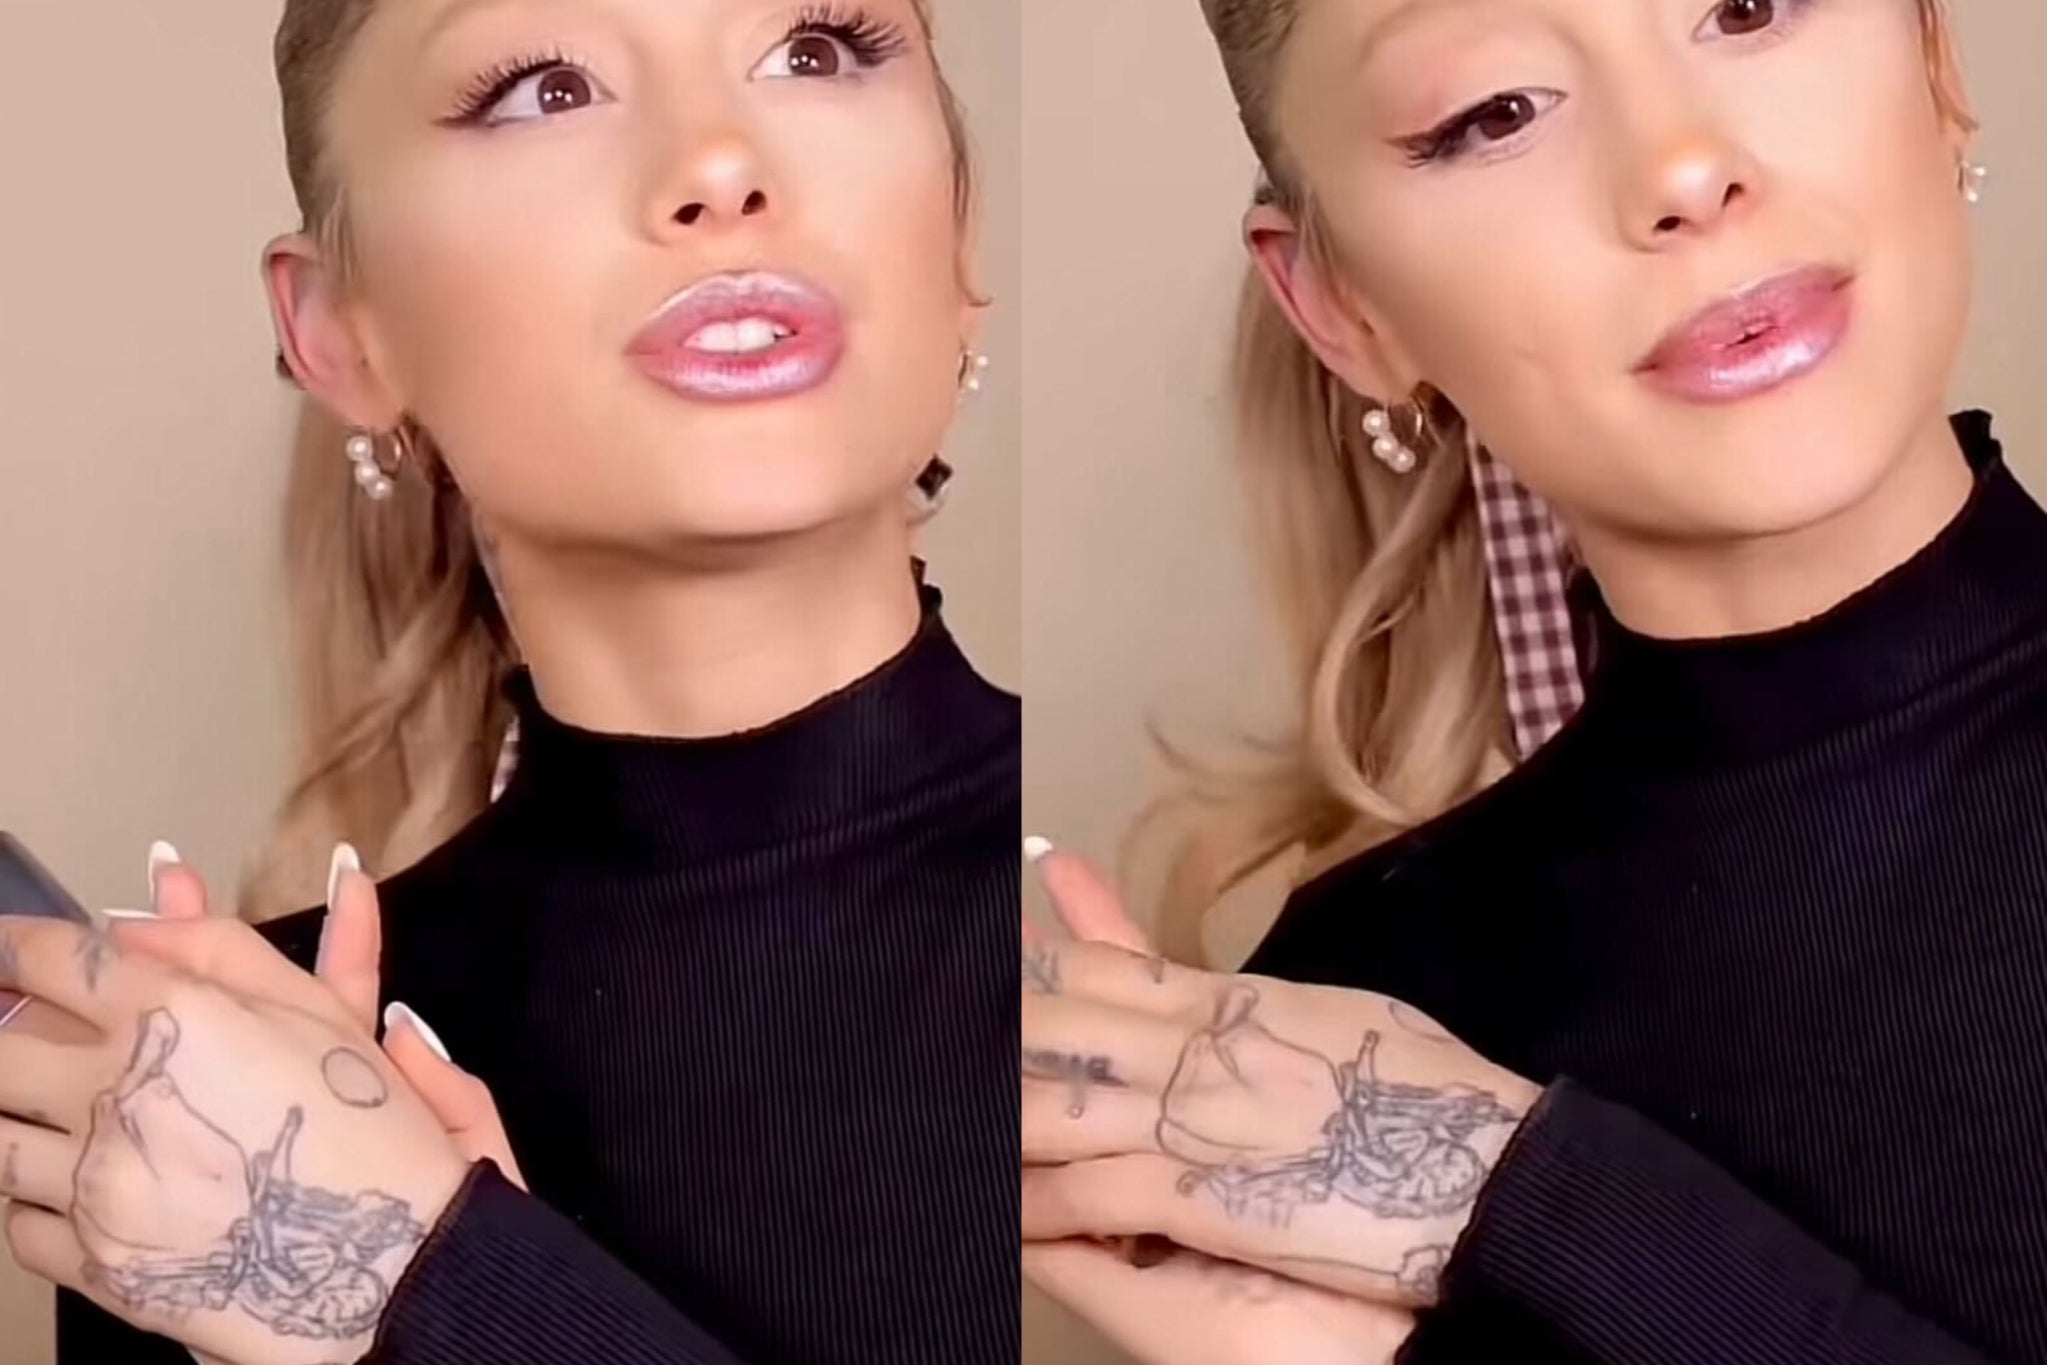 What happened to Ariana Grande's tattoos?